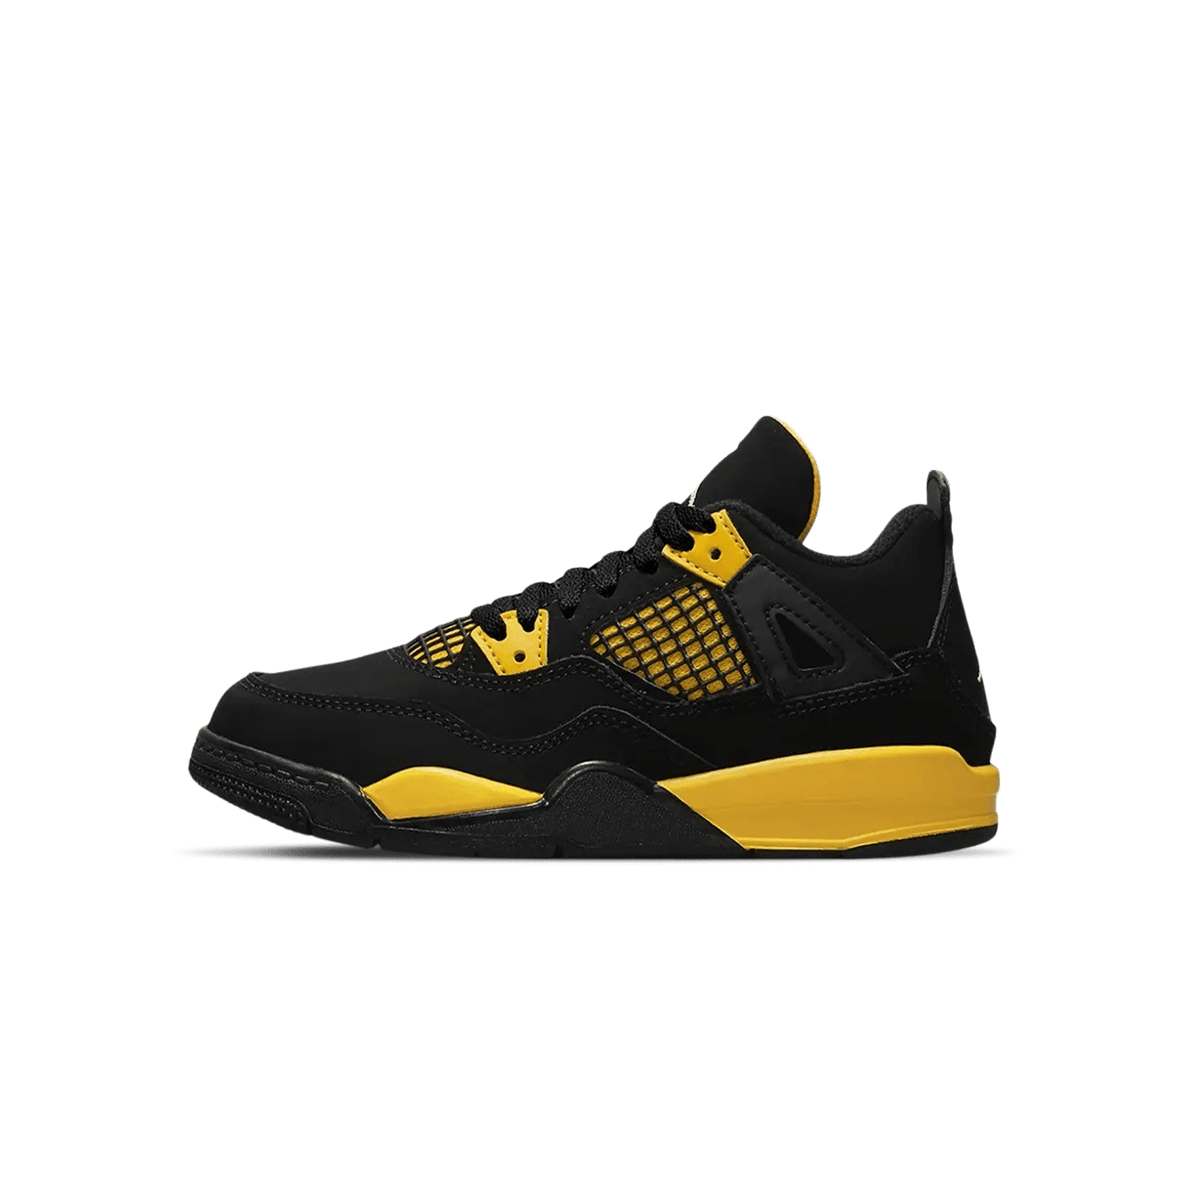 P.G Sneakers Store on Instagram: Nike Air Jordan 4 LV Cream